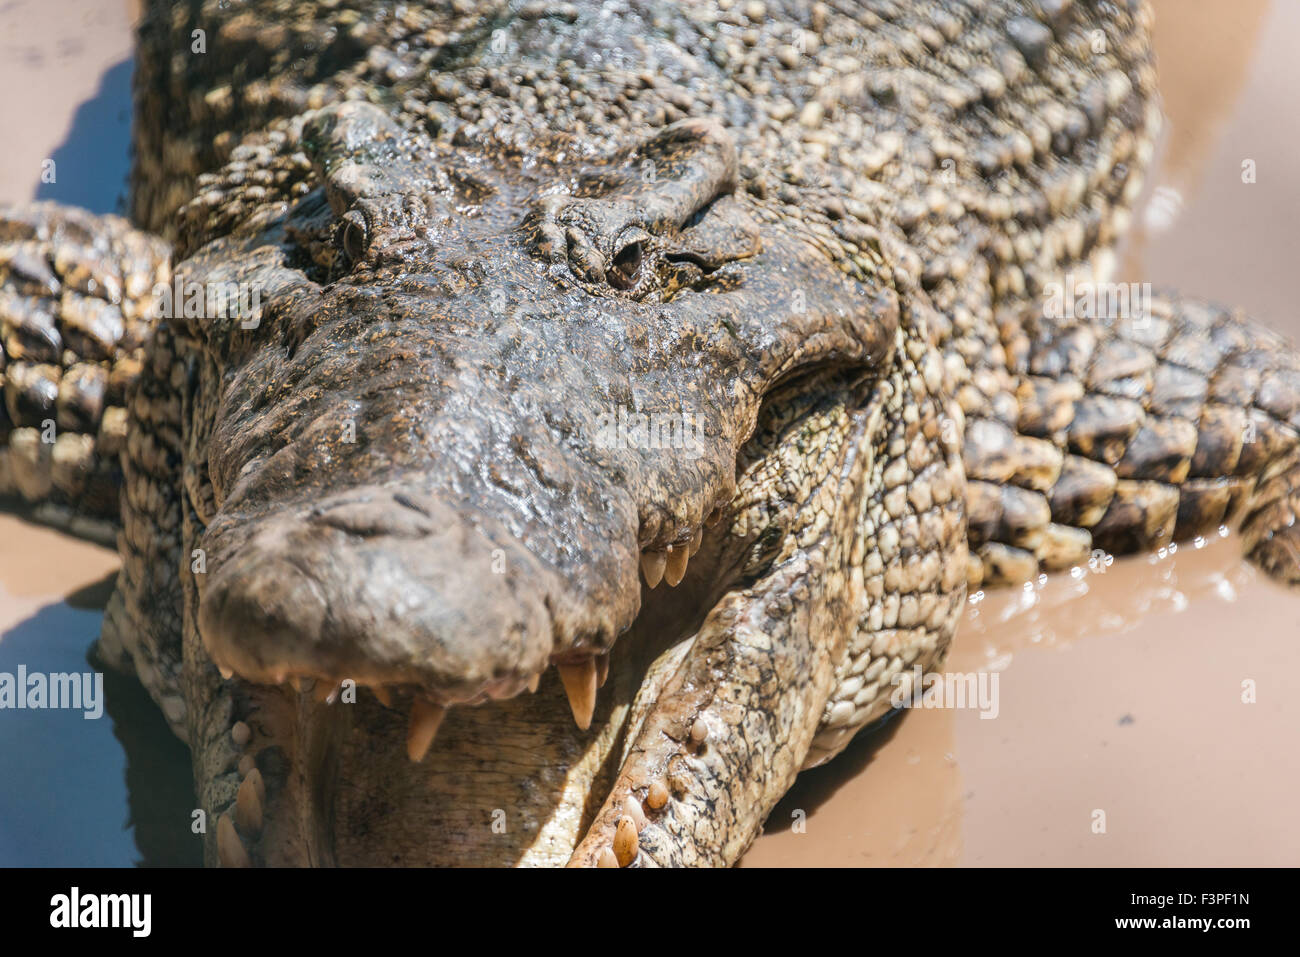 Crocodiles at Guama Crocodile Farm, Cuba. Stock Photo